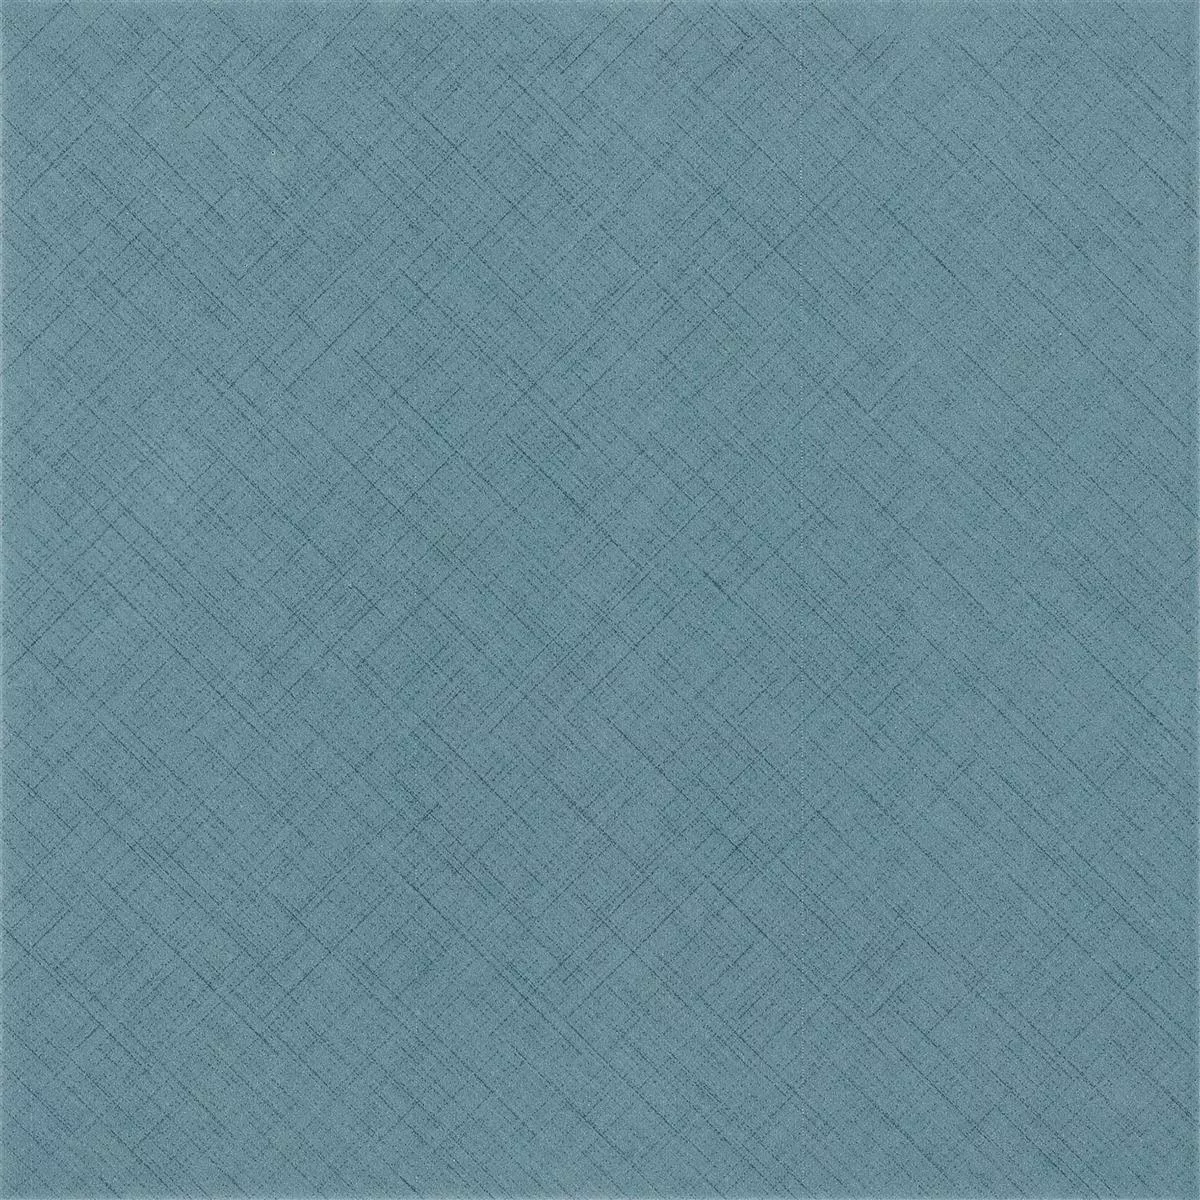 Vzorek Podlahové Dlaždice Flowerfield 18,5x18,5cm Modrá Základní Dlaždice